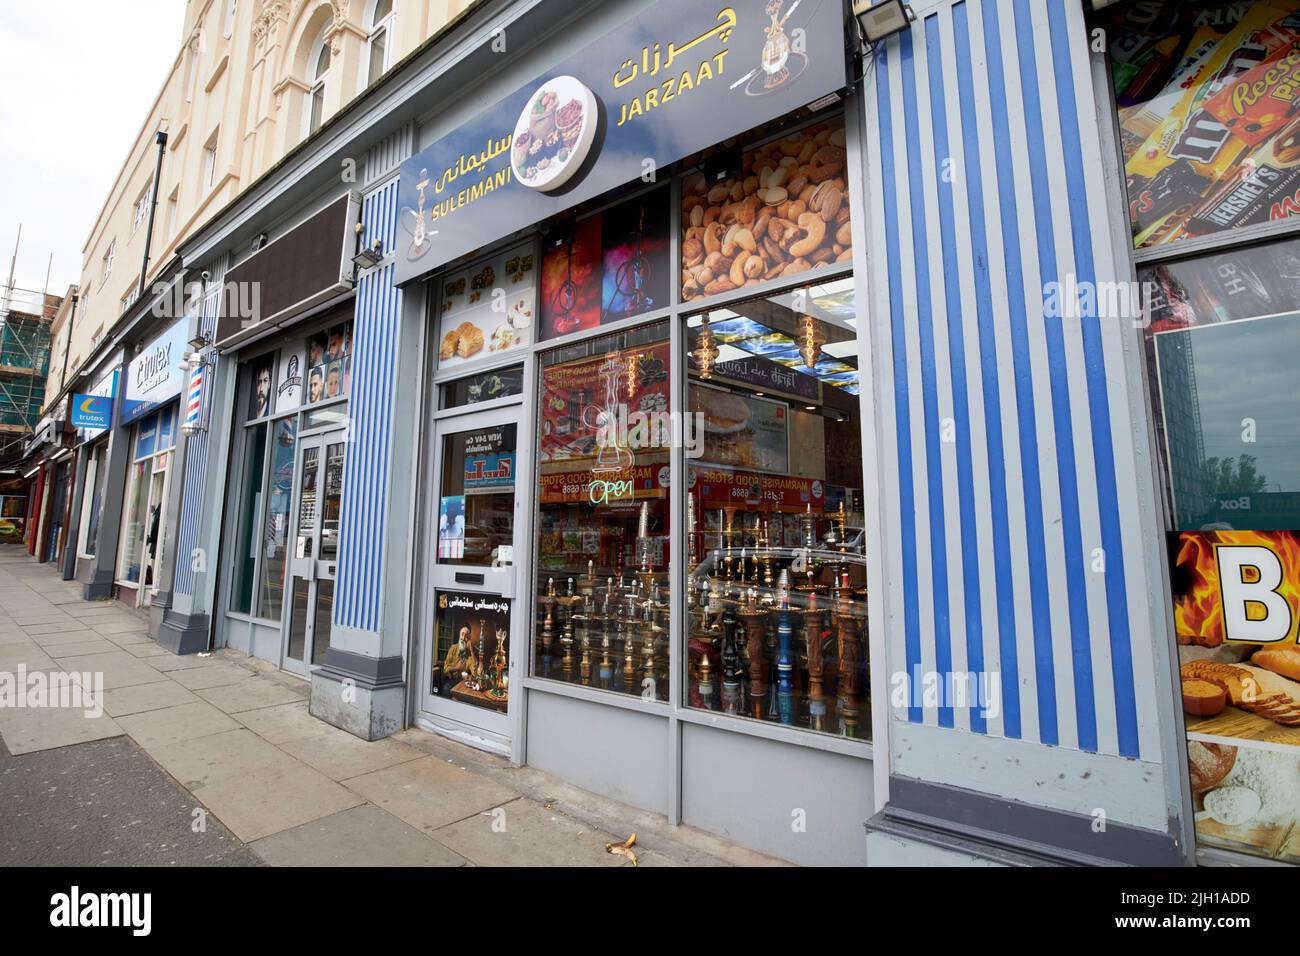 Immigré shisha pipe fumant shop london Road Liverpool Angleterre Royaume-Uni Banque D'Images